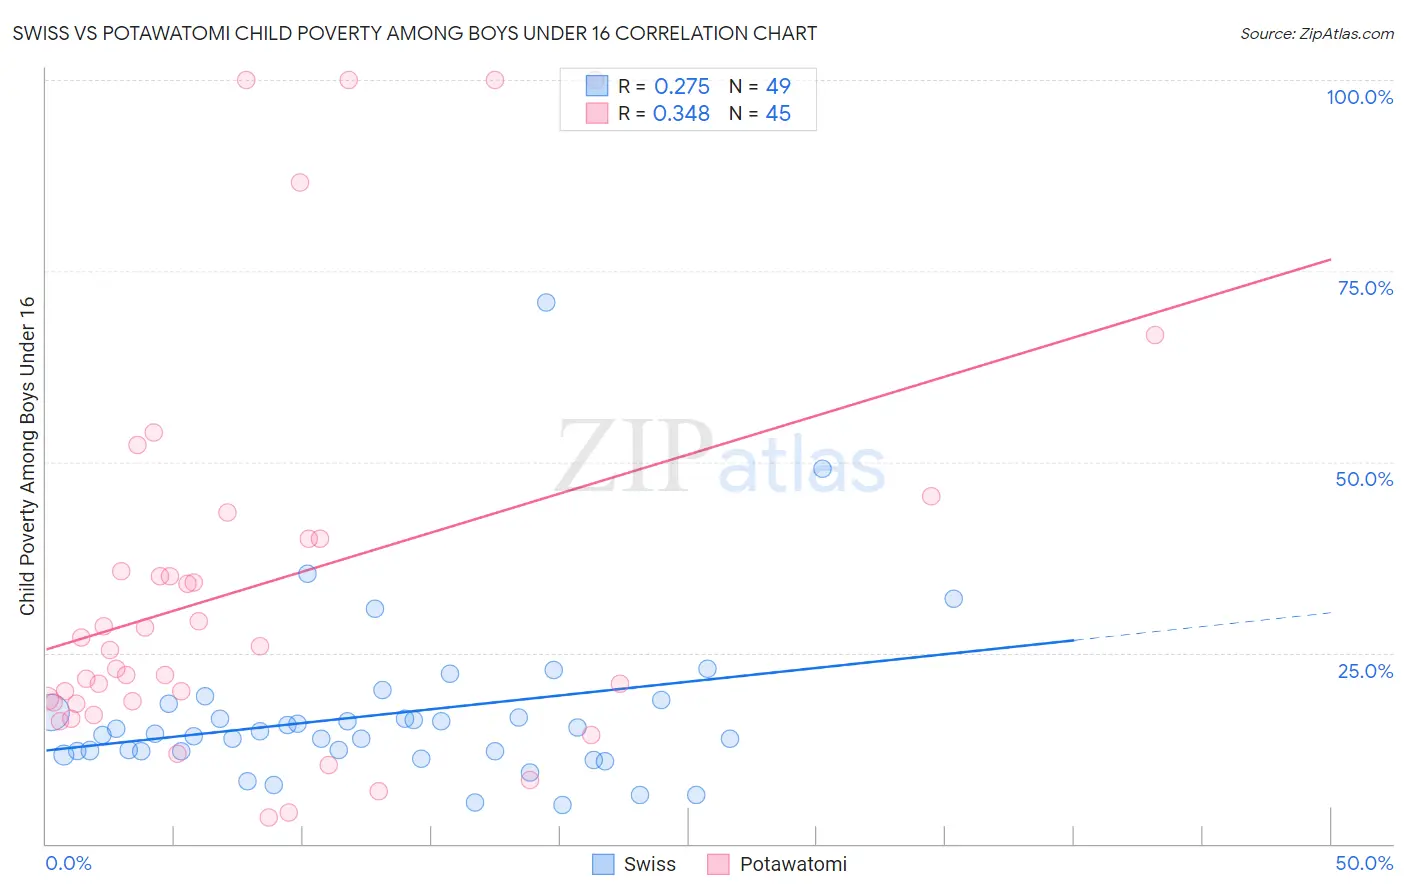 Swiss vs Potawatomi Child Poverty Among Boys Under 16